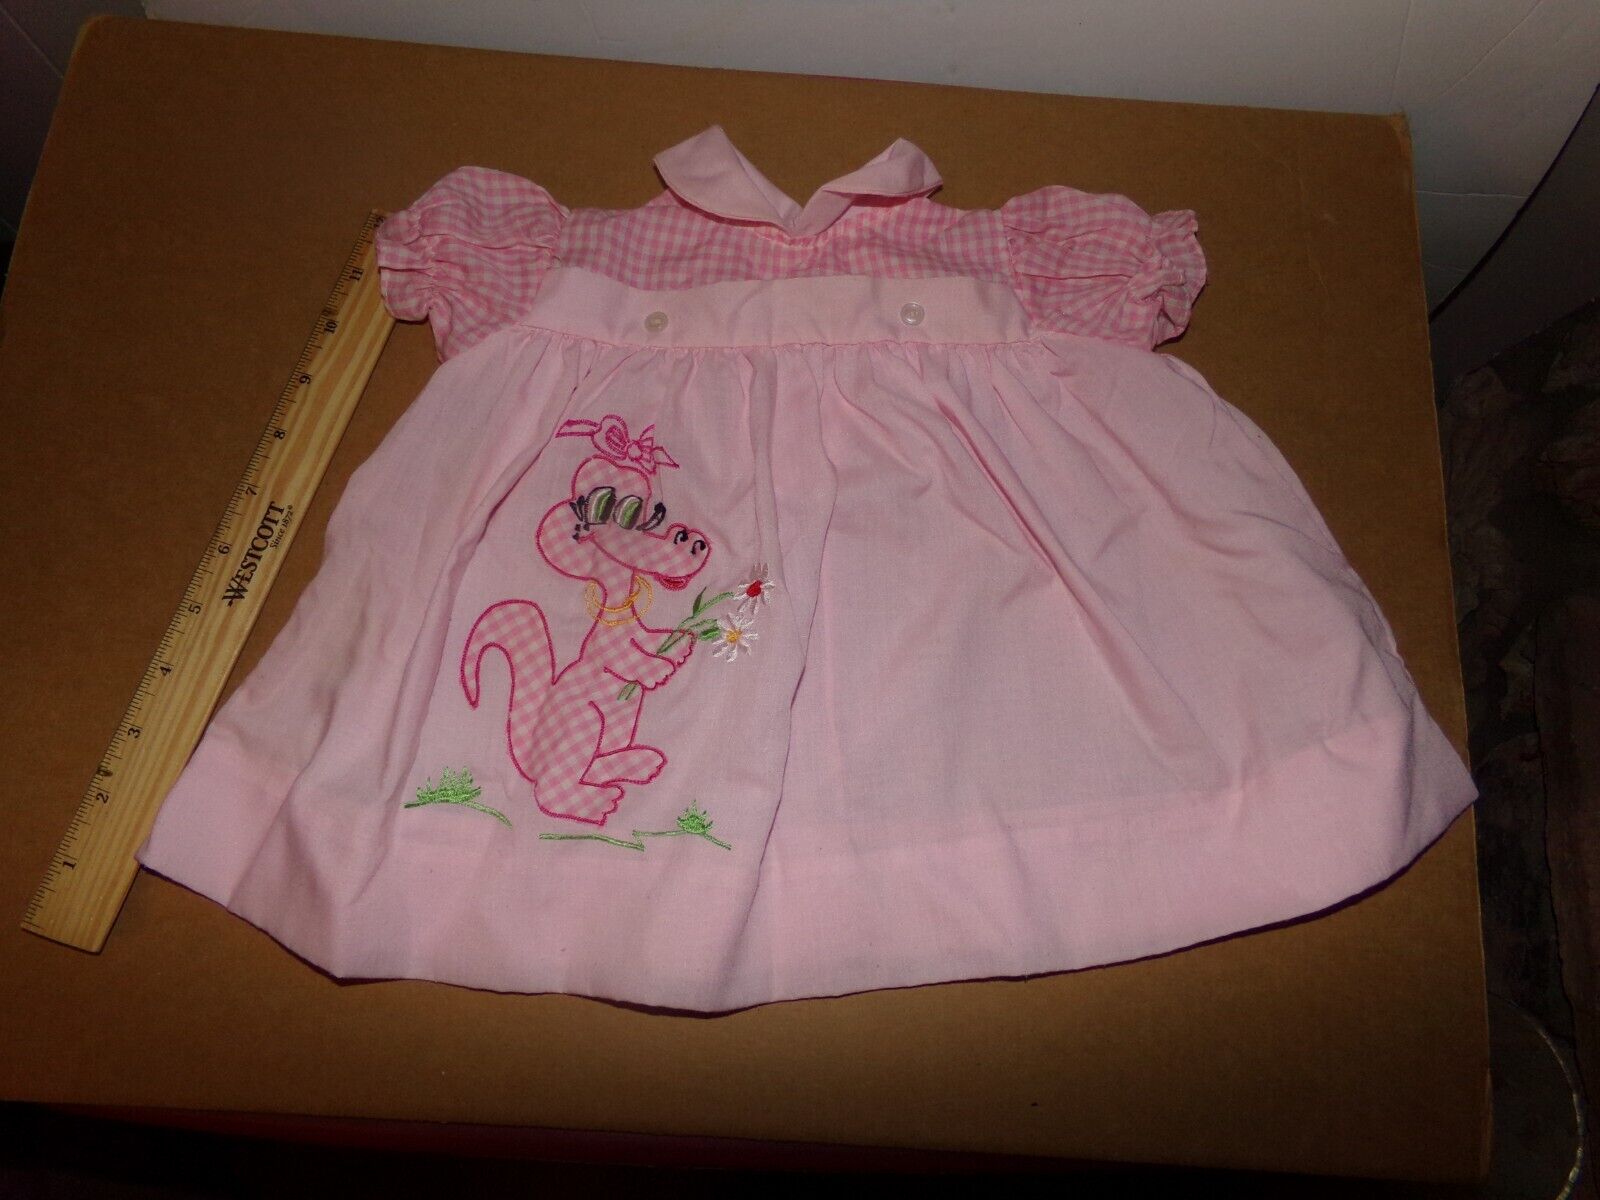 FIT XAVIER ROBERTS SCULPTURE CABBAGE PATCH KID SOFTY GIRL dk/pink DRESS VINTAGE0